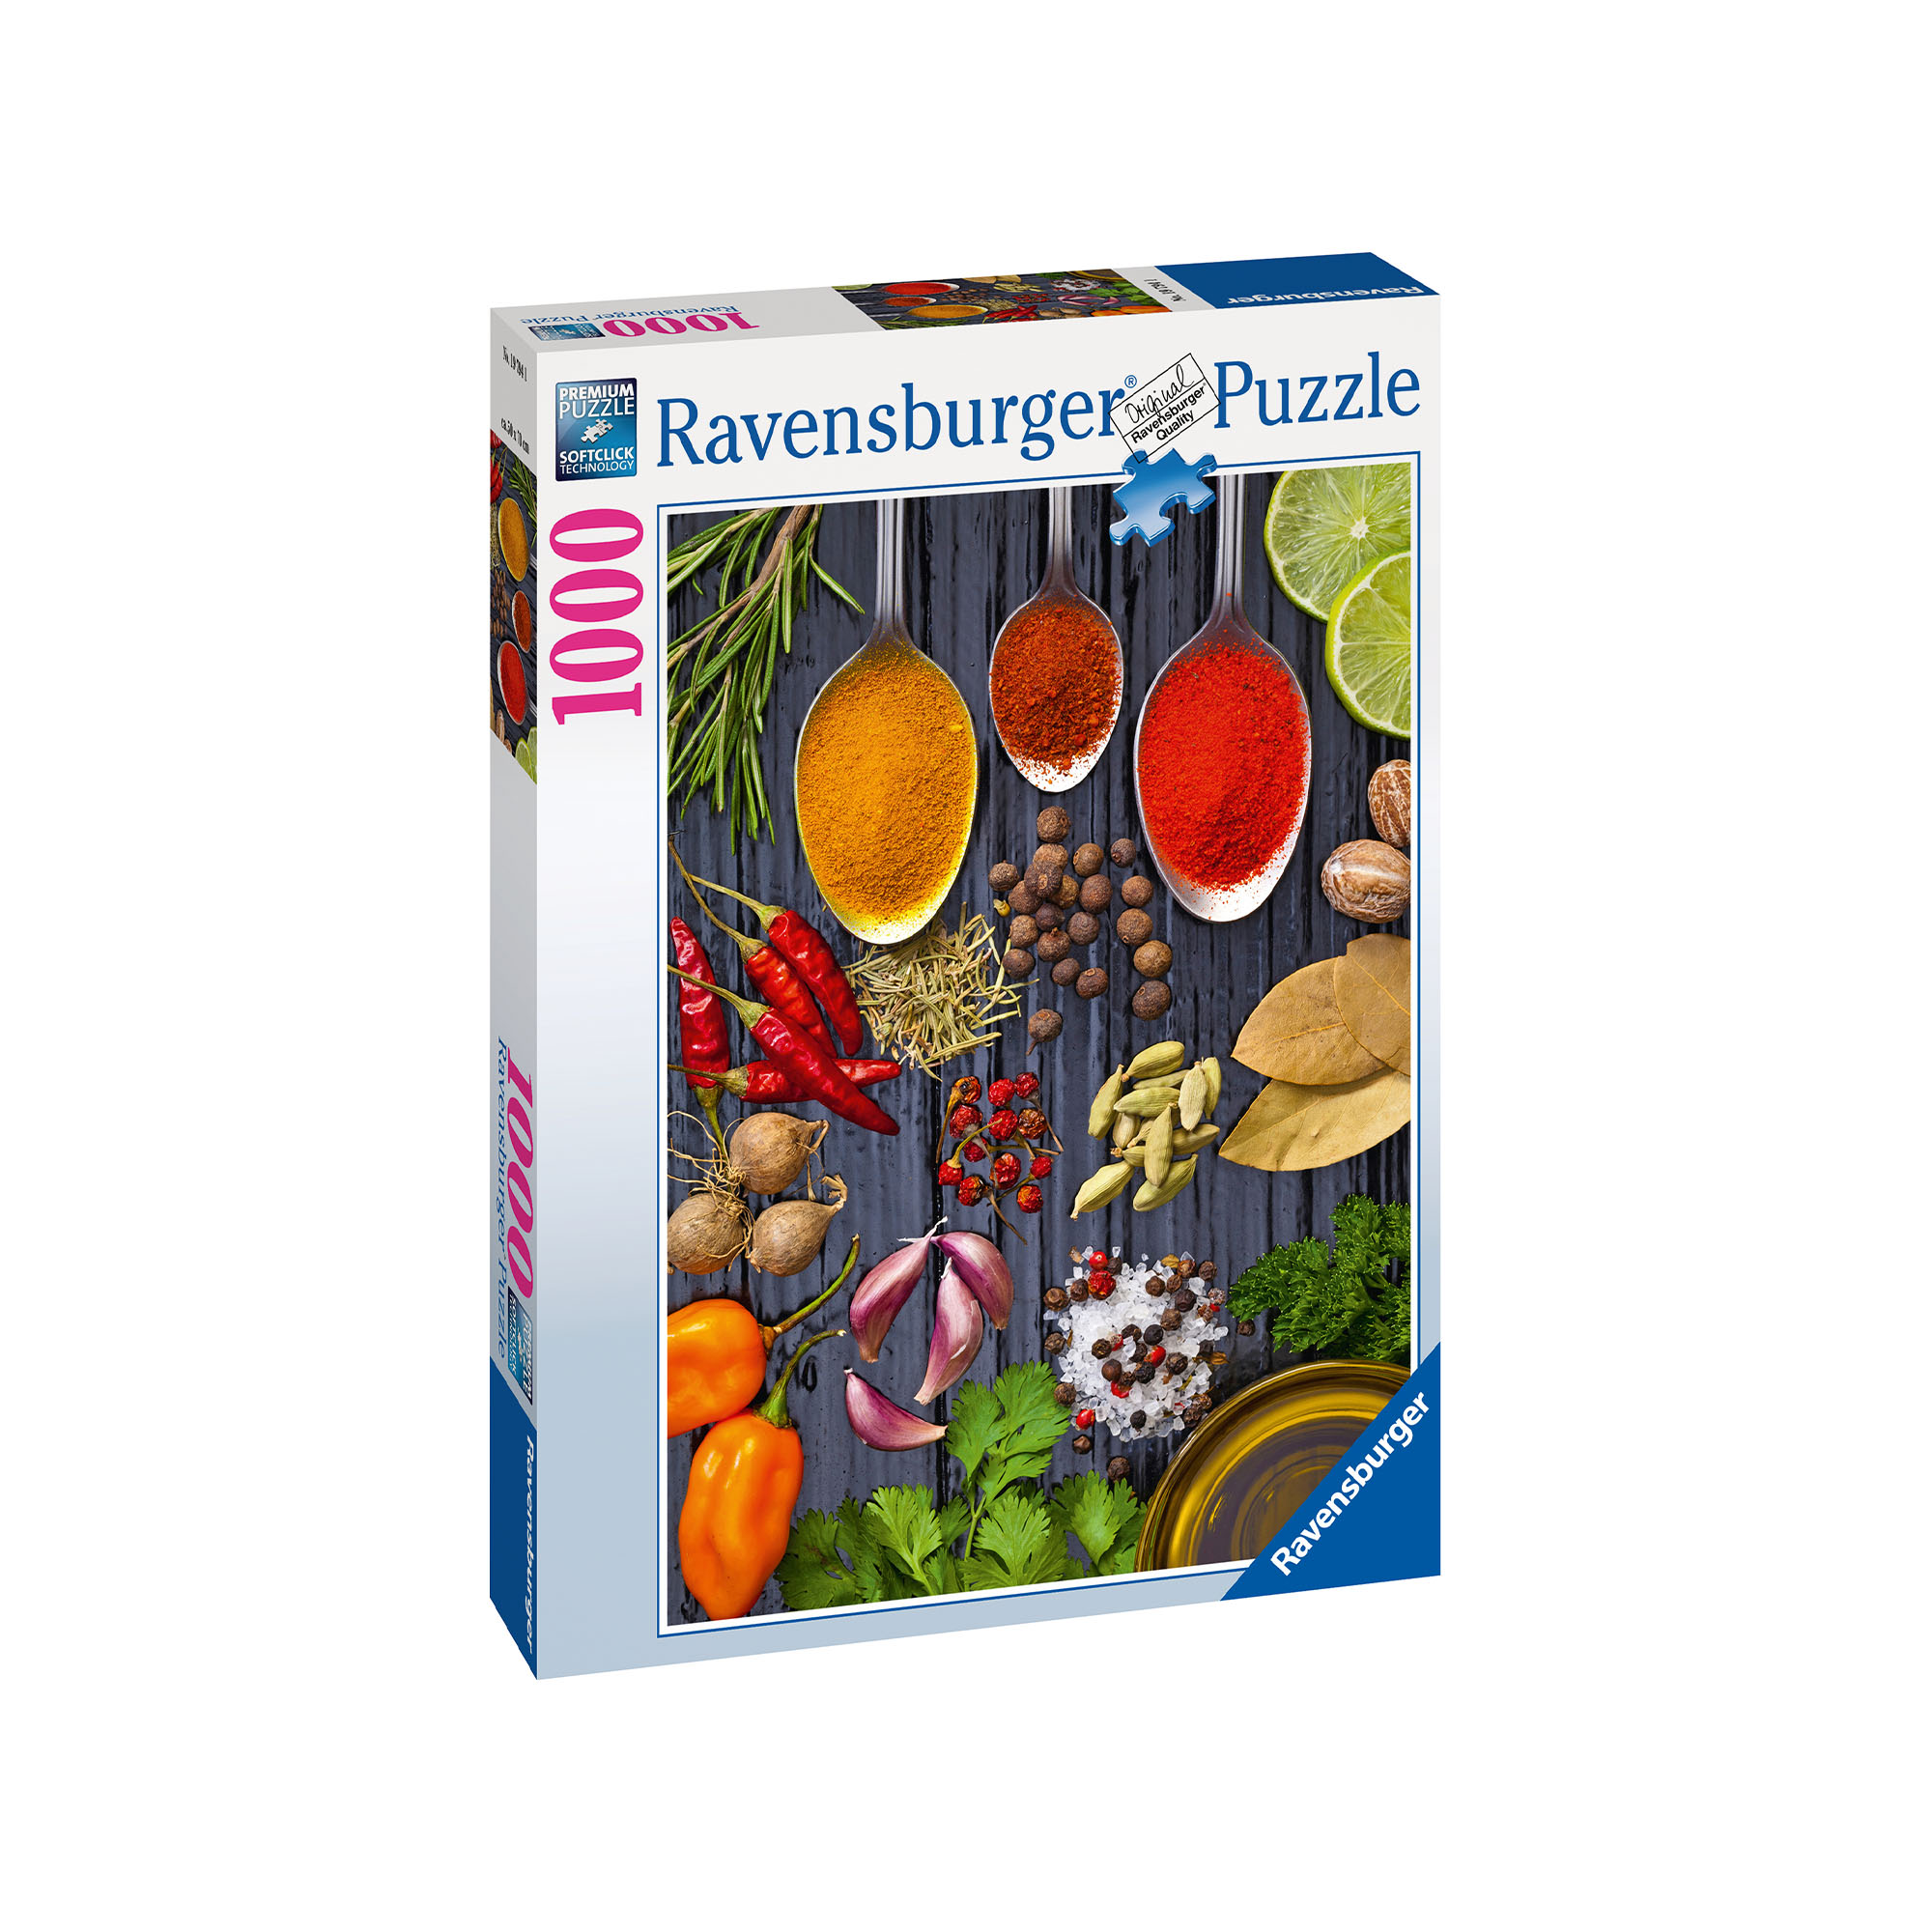 Ravensburger Puzzle 1000 pezzi 19794 - Spezie Sul Tavolo, , large